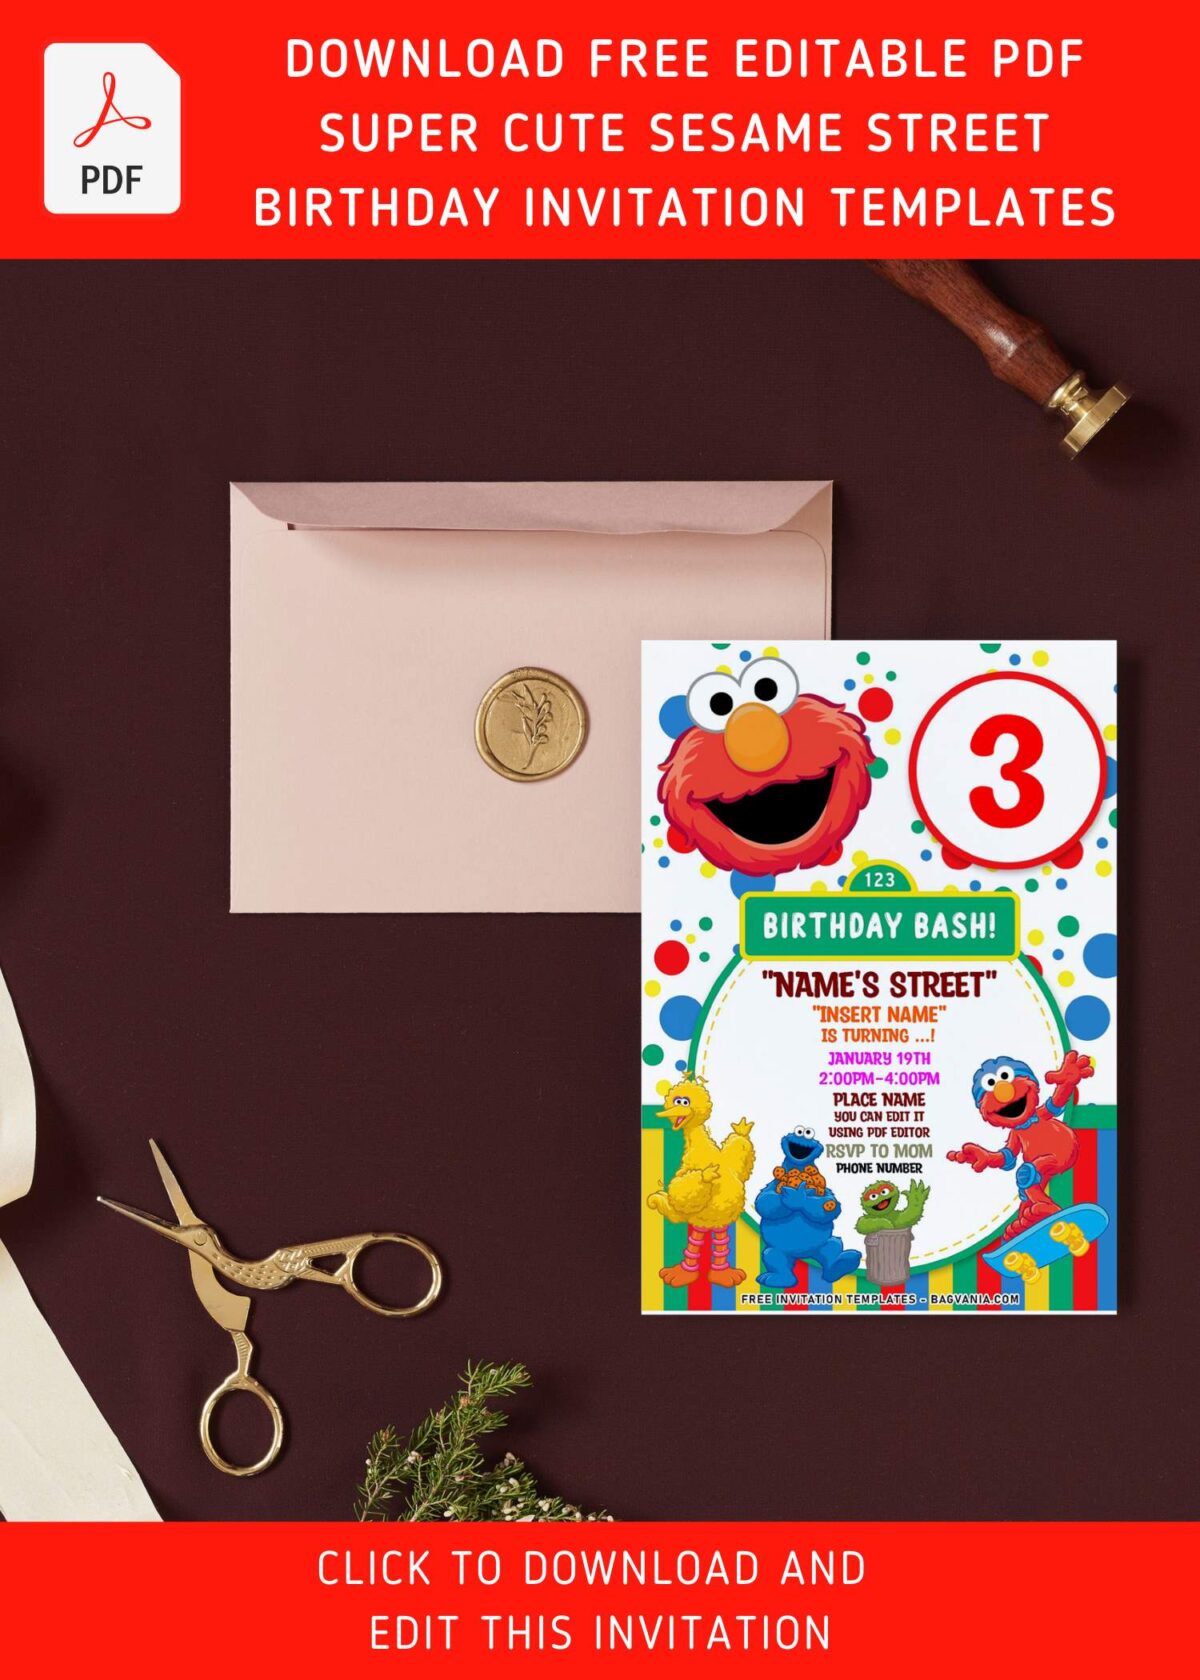 (Free Editable PDF) Super Cute Sesame Street Birthday Invitation Templates with portrait orientation design